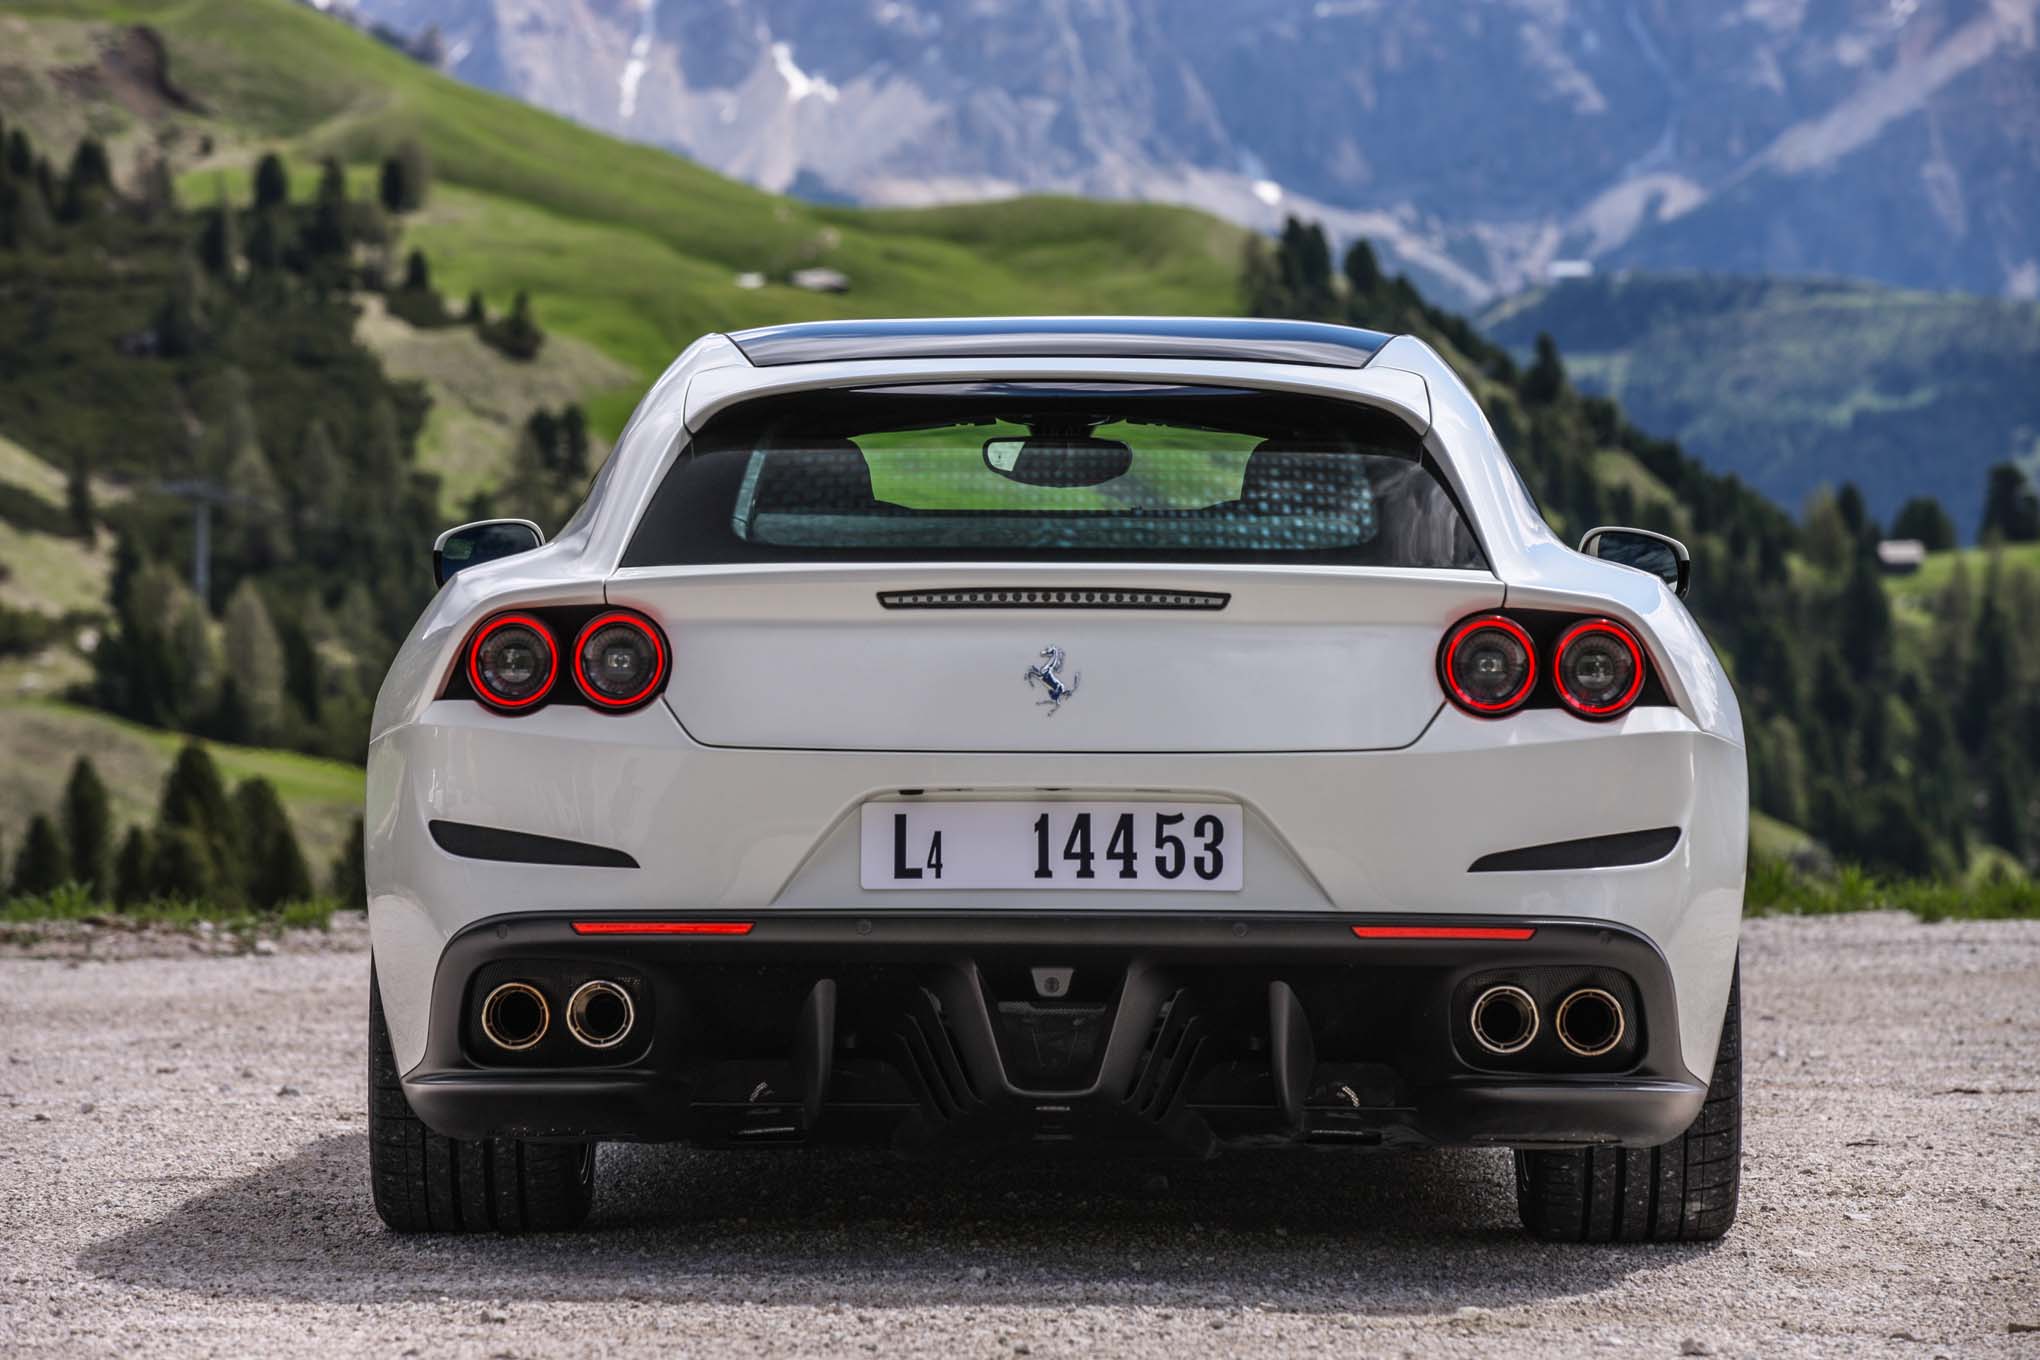 Amazing Ferrari GTC4Lusso Pictures & Backgrounds